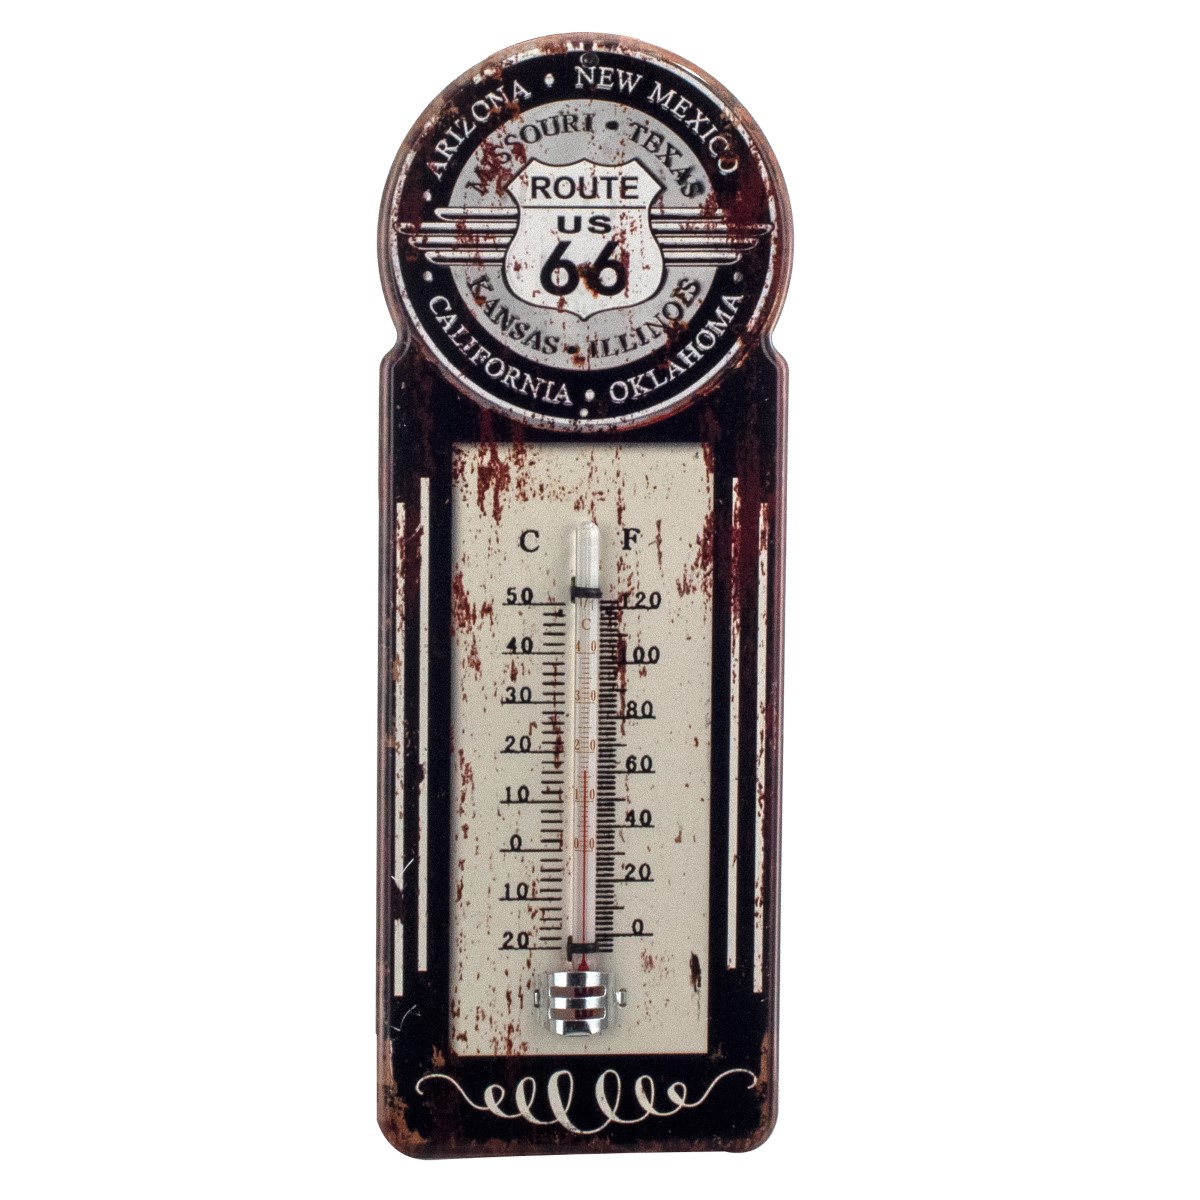 Thermomètre vintage Route 66 Chicago - Los Angeles